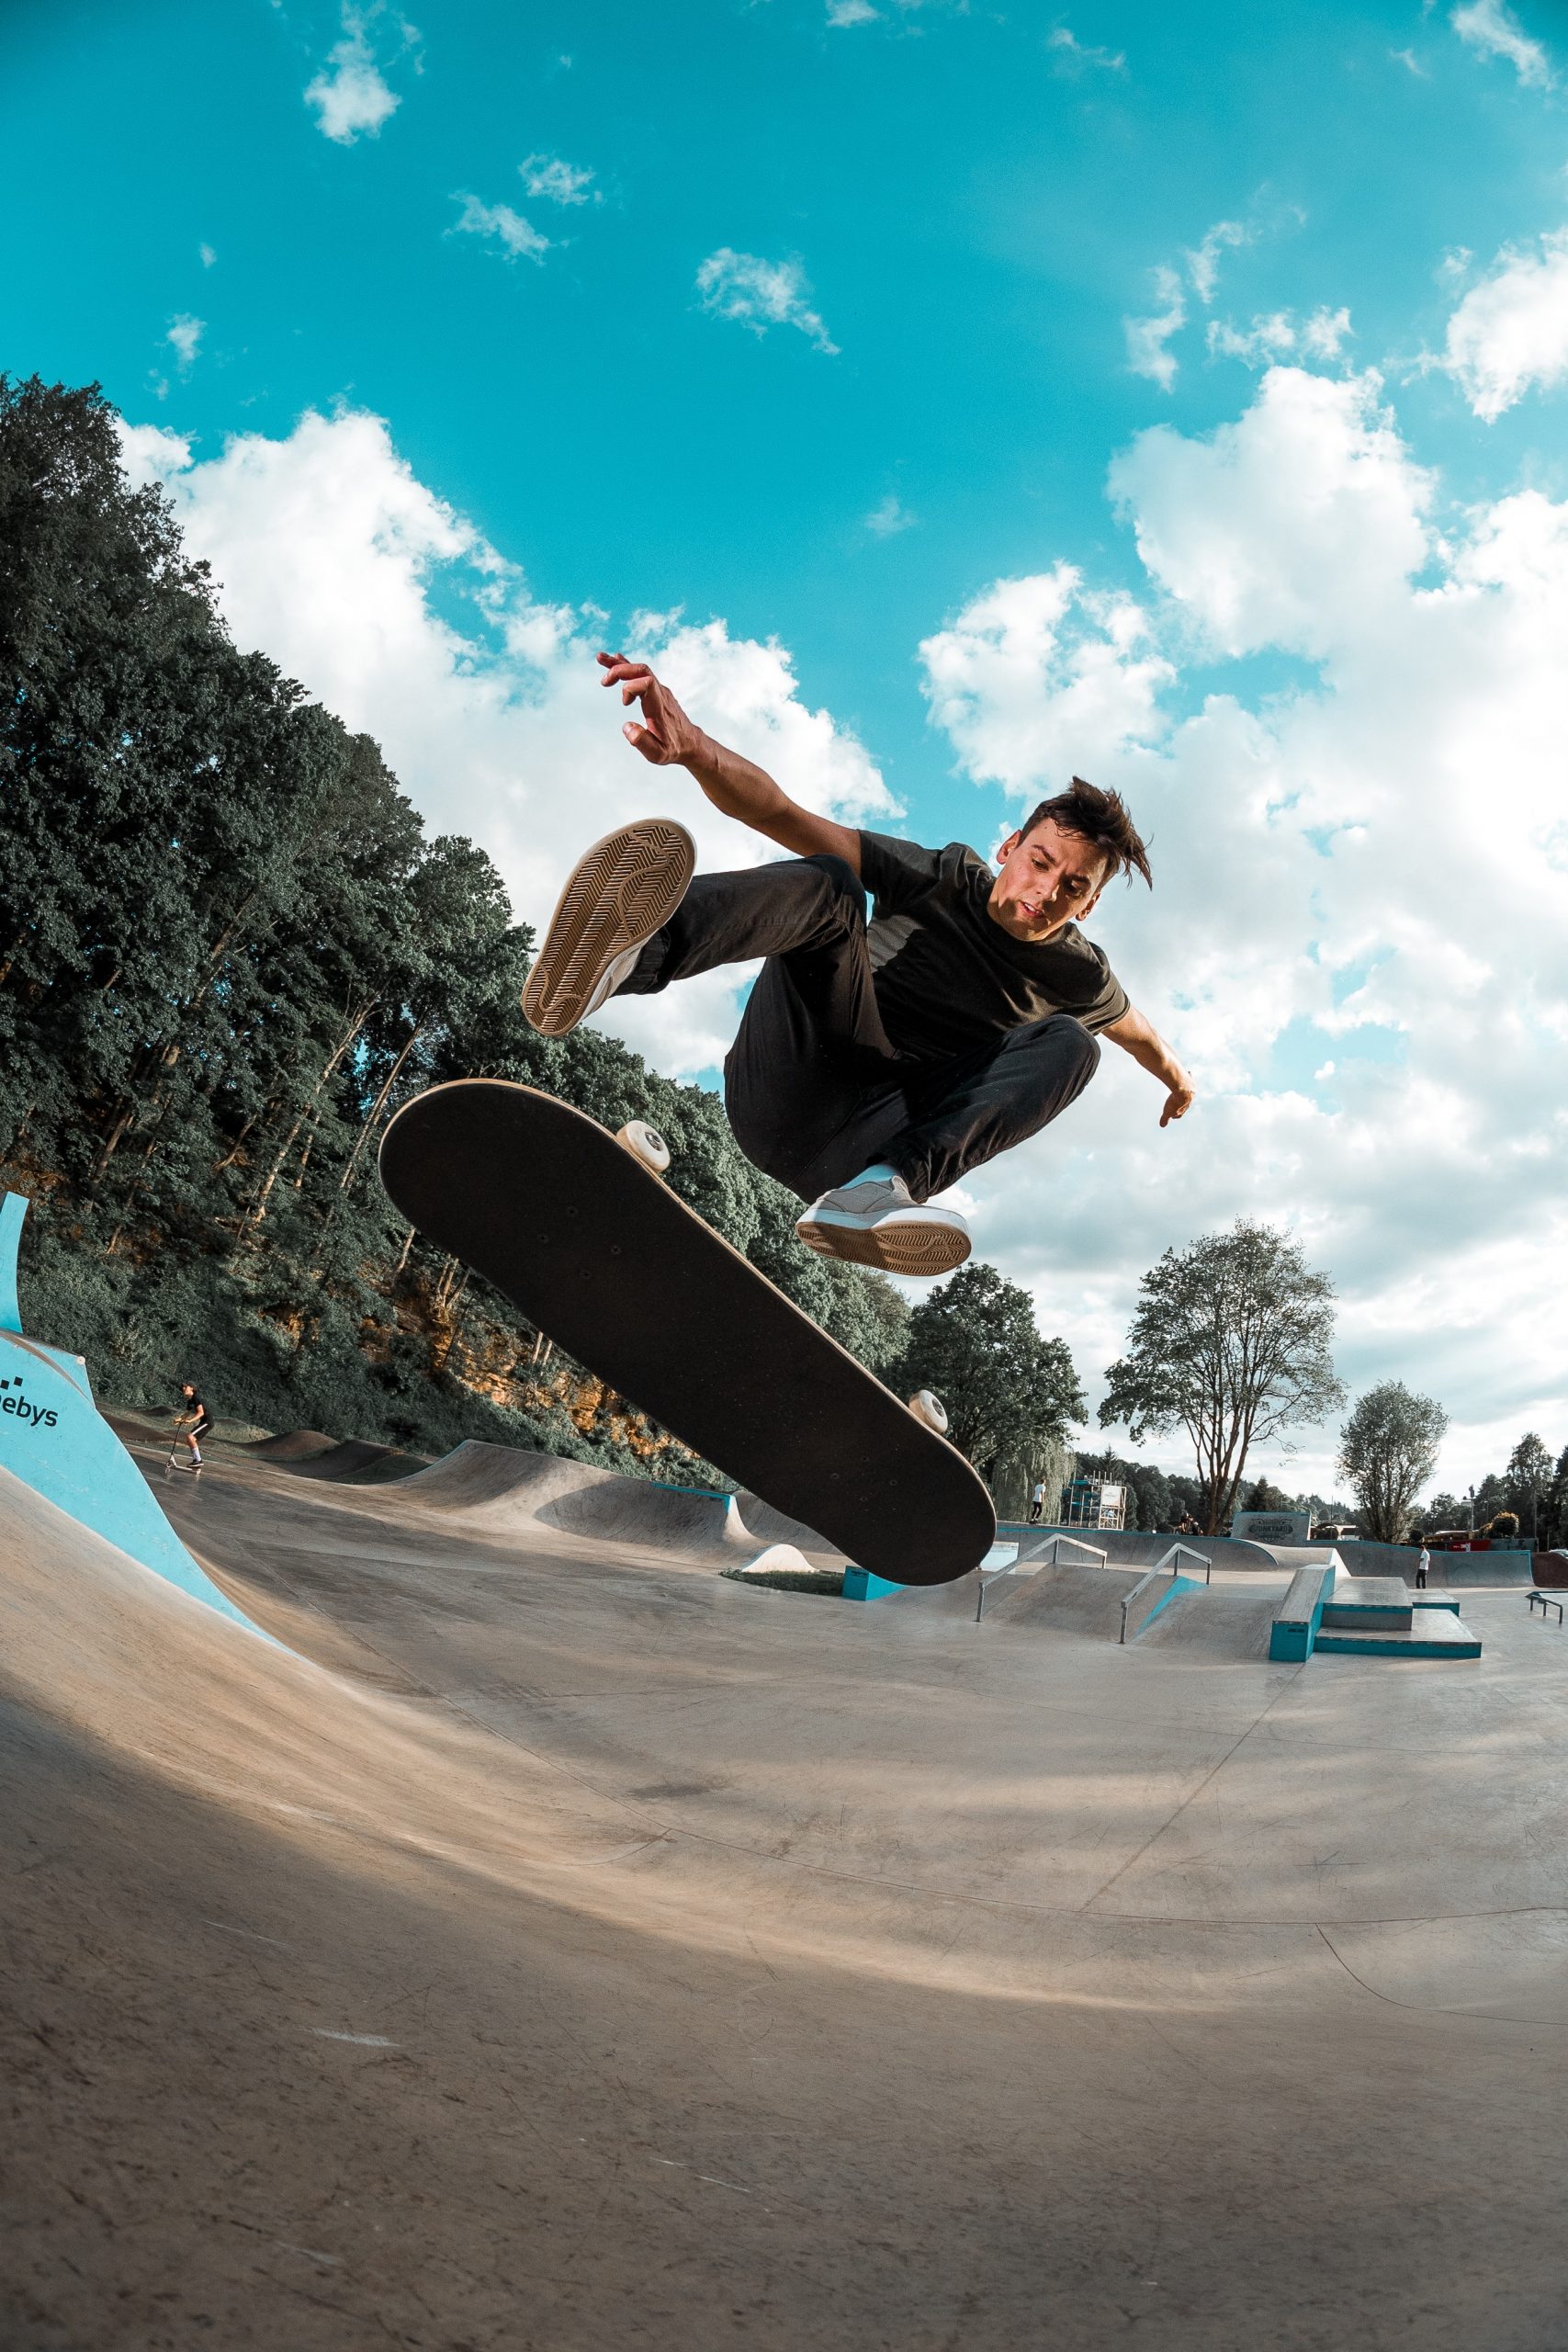 How to Skateboard: Tips for Beginners